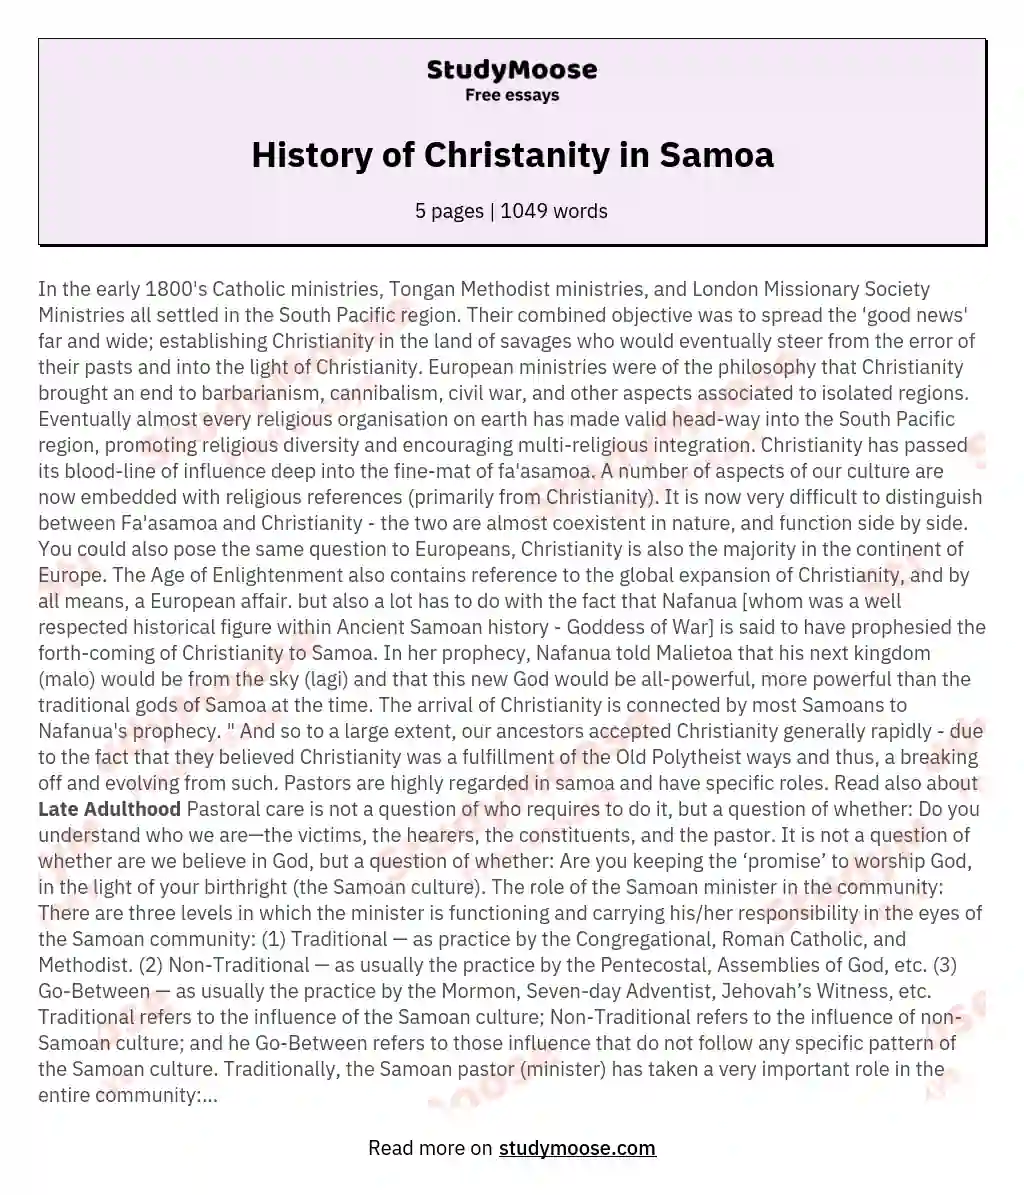 History of Christanity in Samoa essay